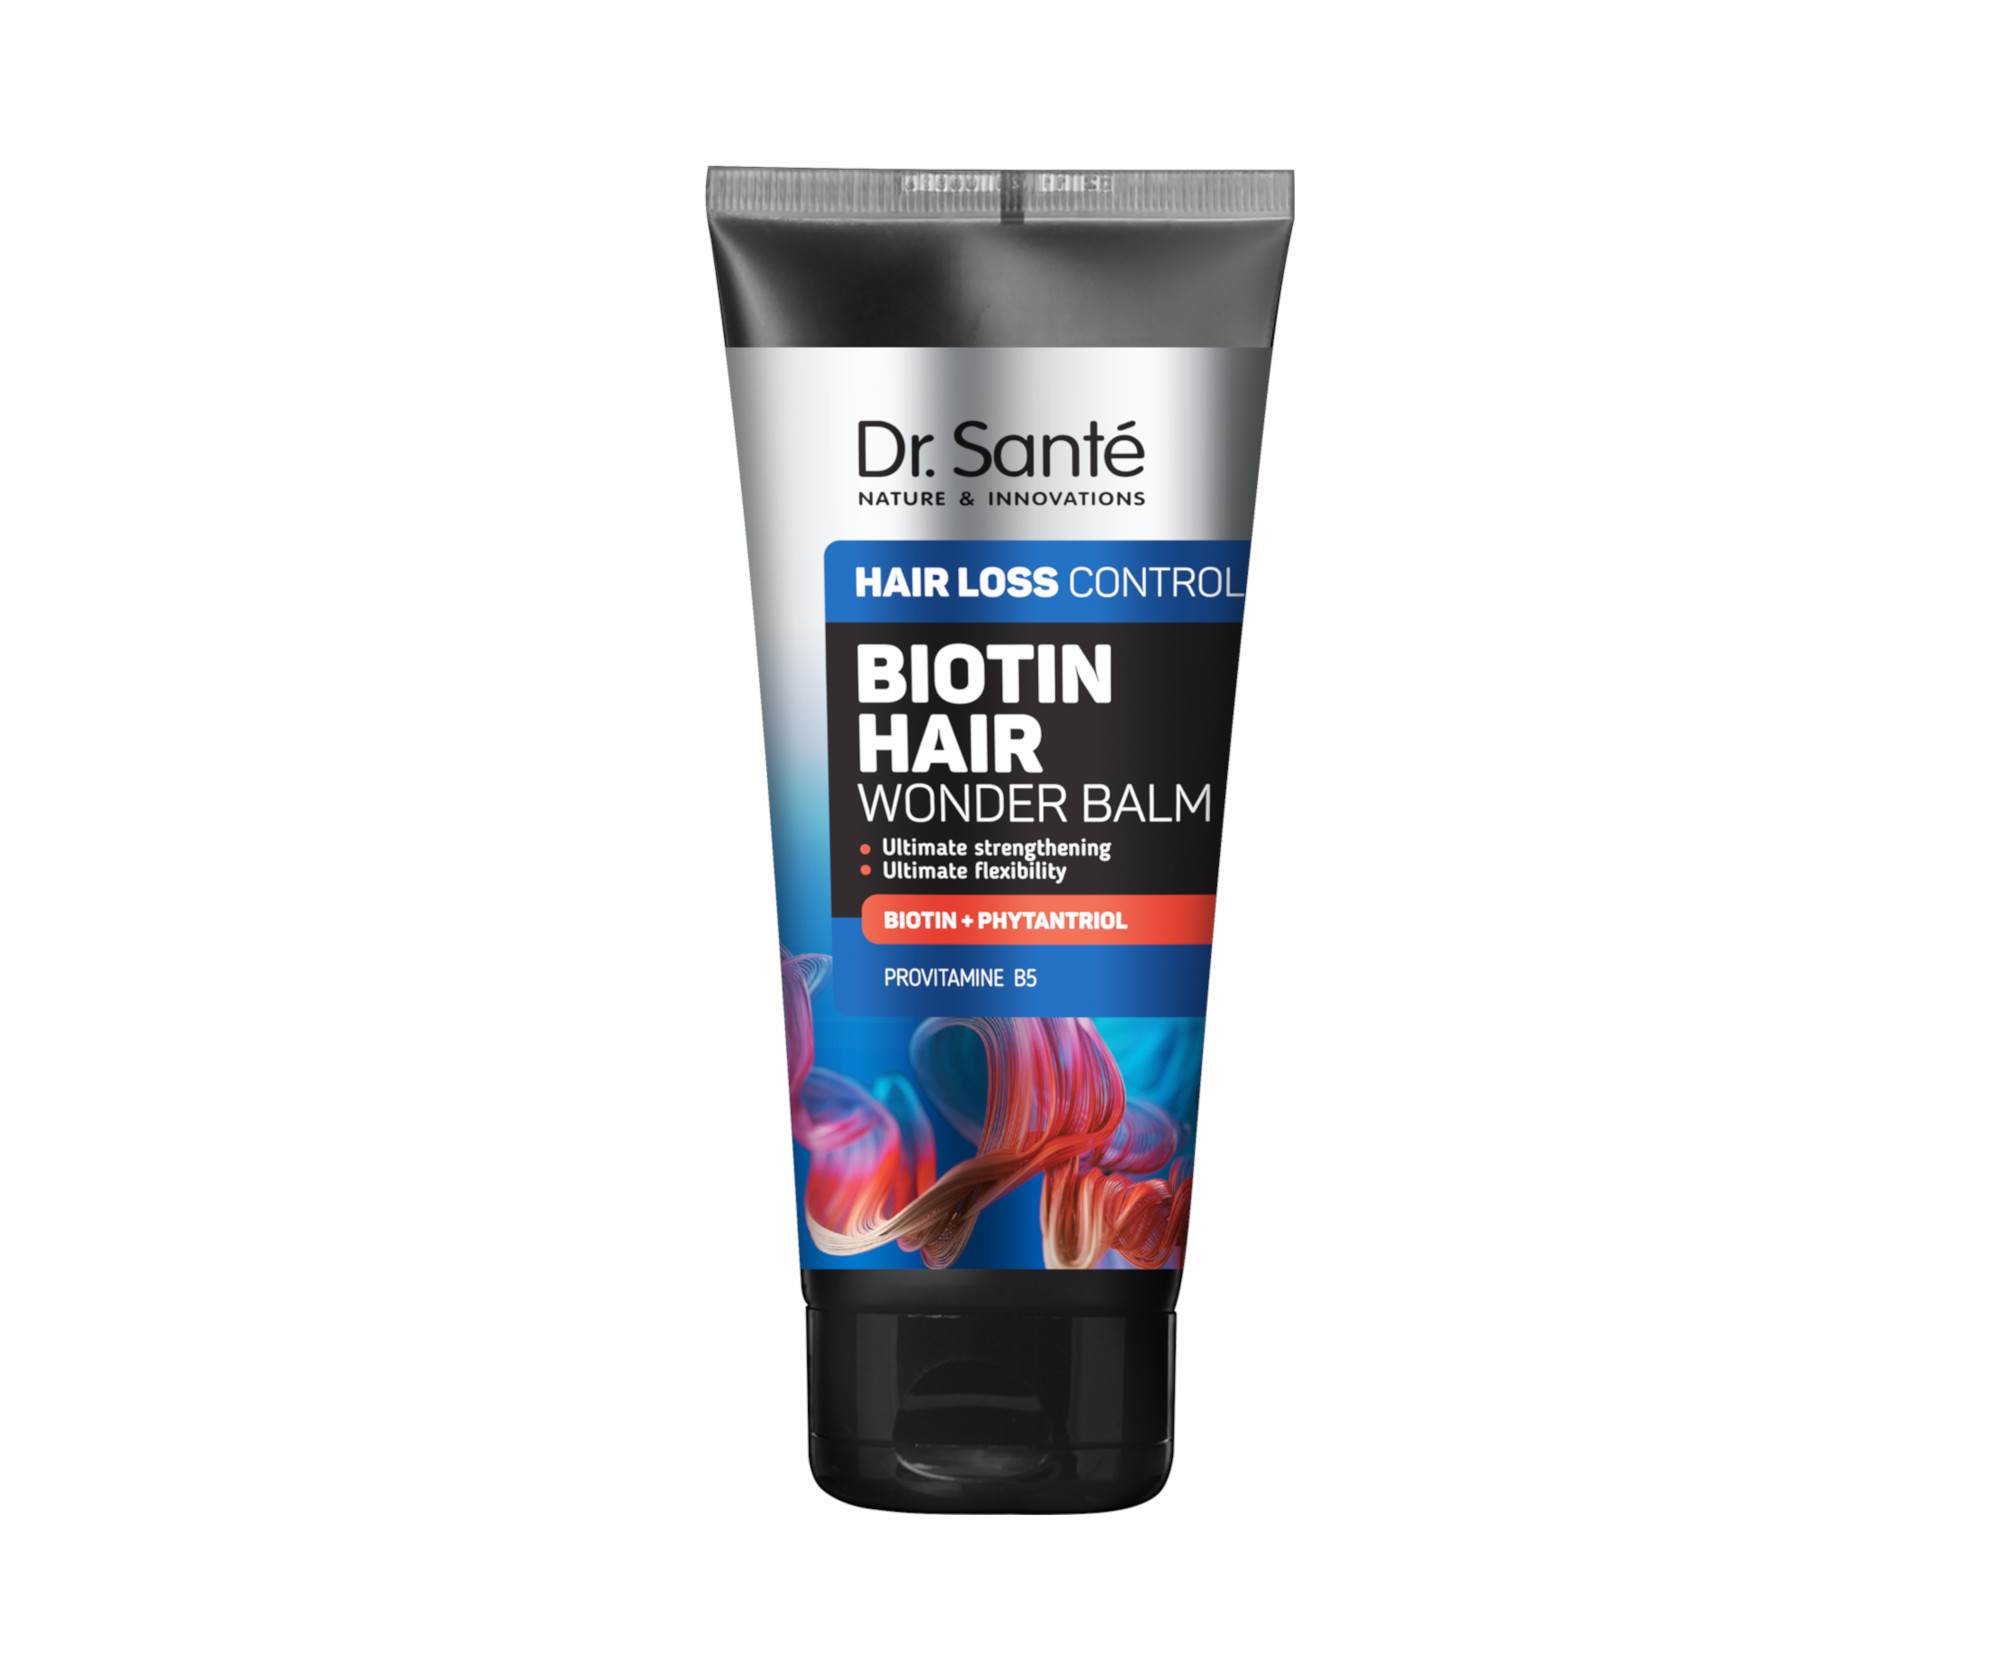 Kondicionér proti vypadávání vlasů Dr. Santé Hair Loss Control Biotin Hair Wonder Balm - 200 ml